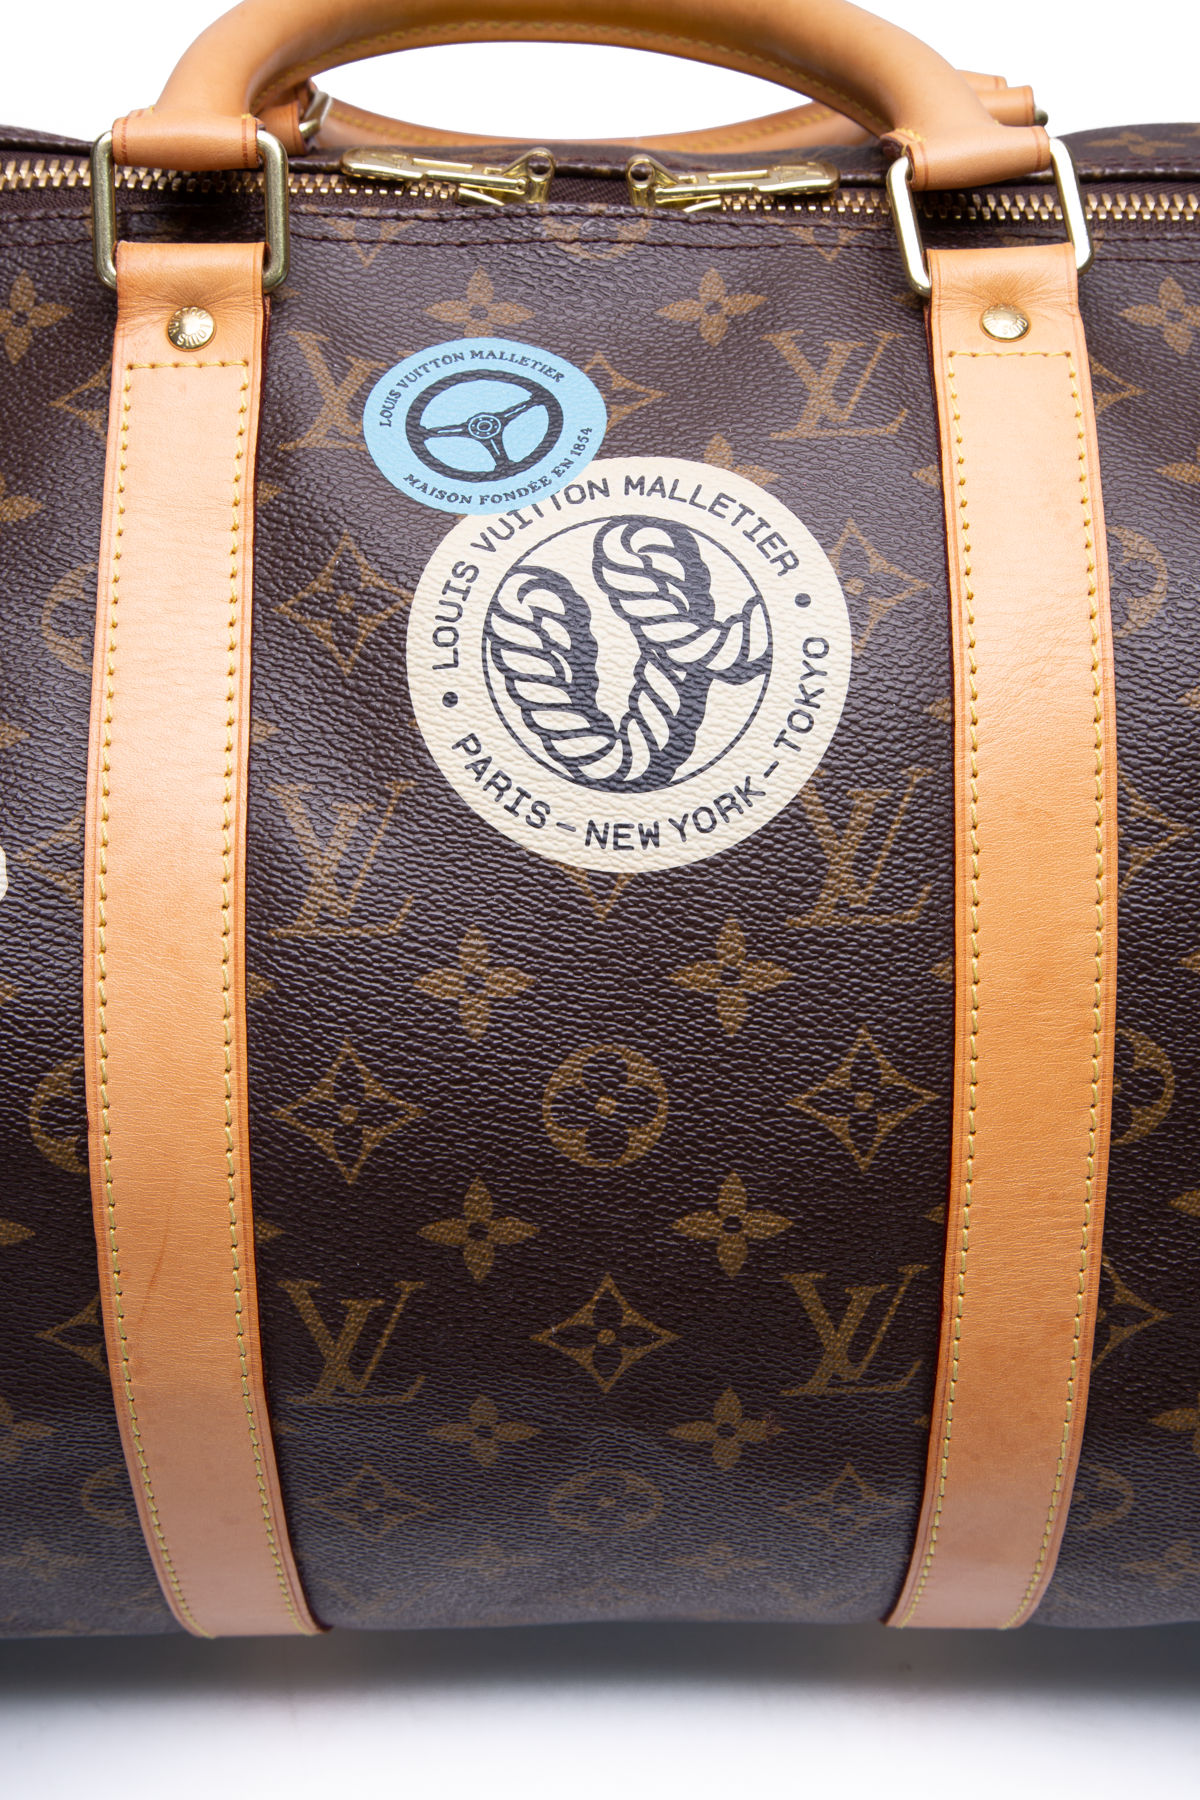 Louis Vuitton My LV World Tour Keepall Bandouliere 50 Travel Bag